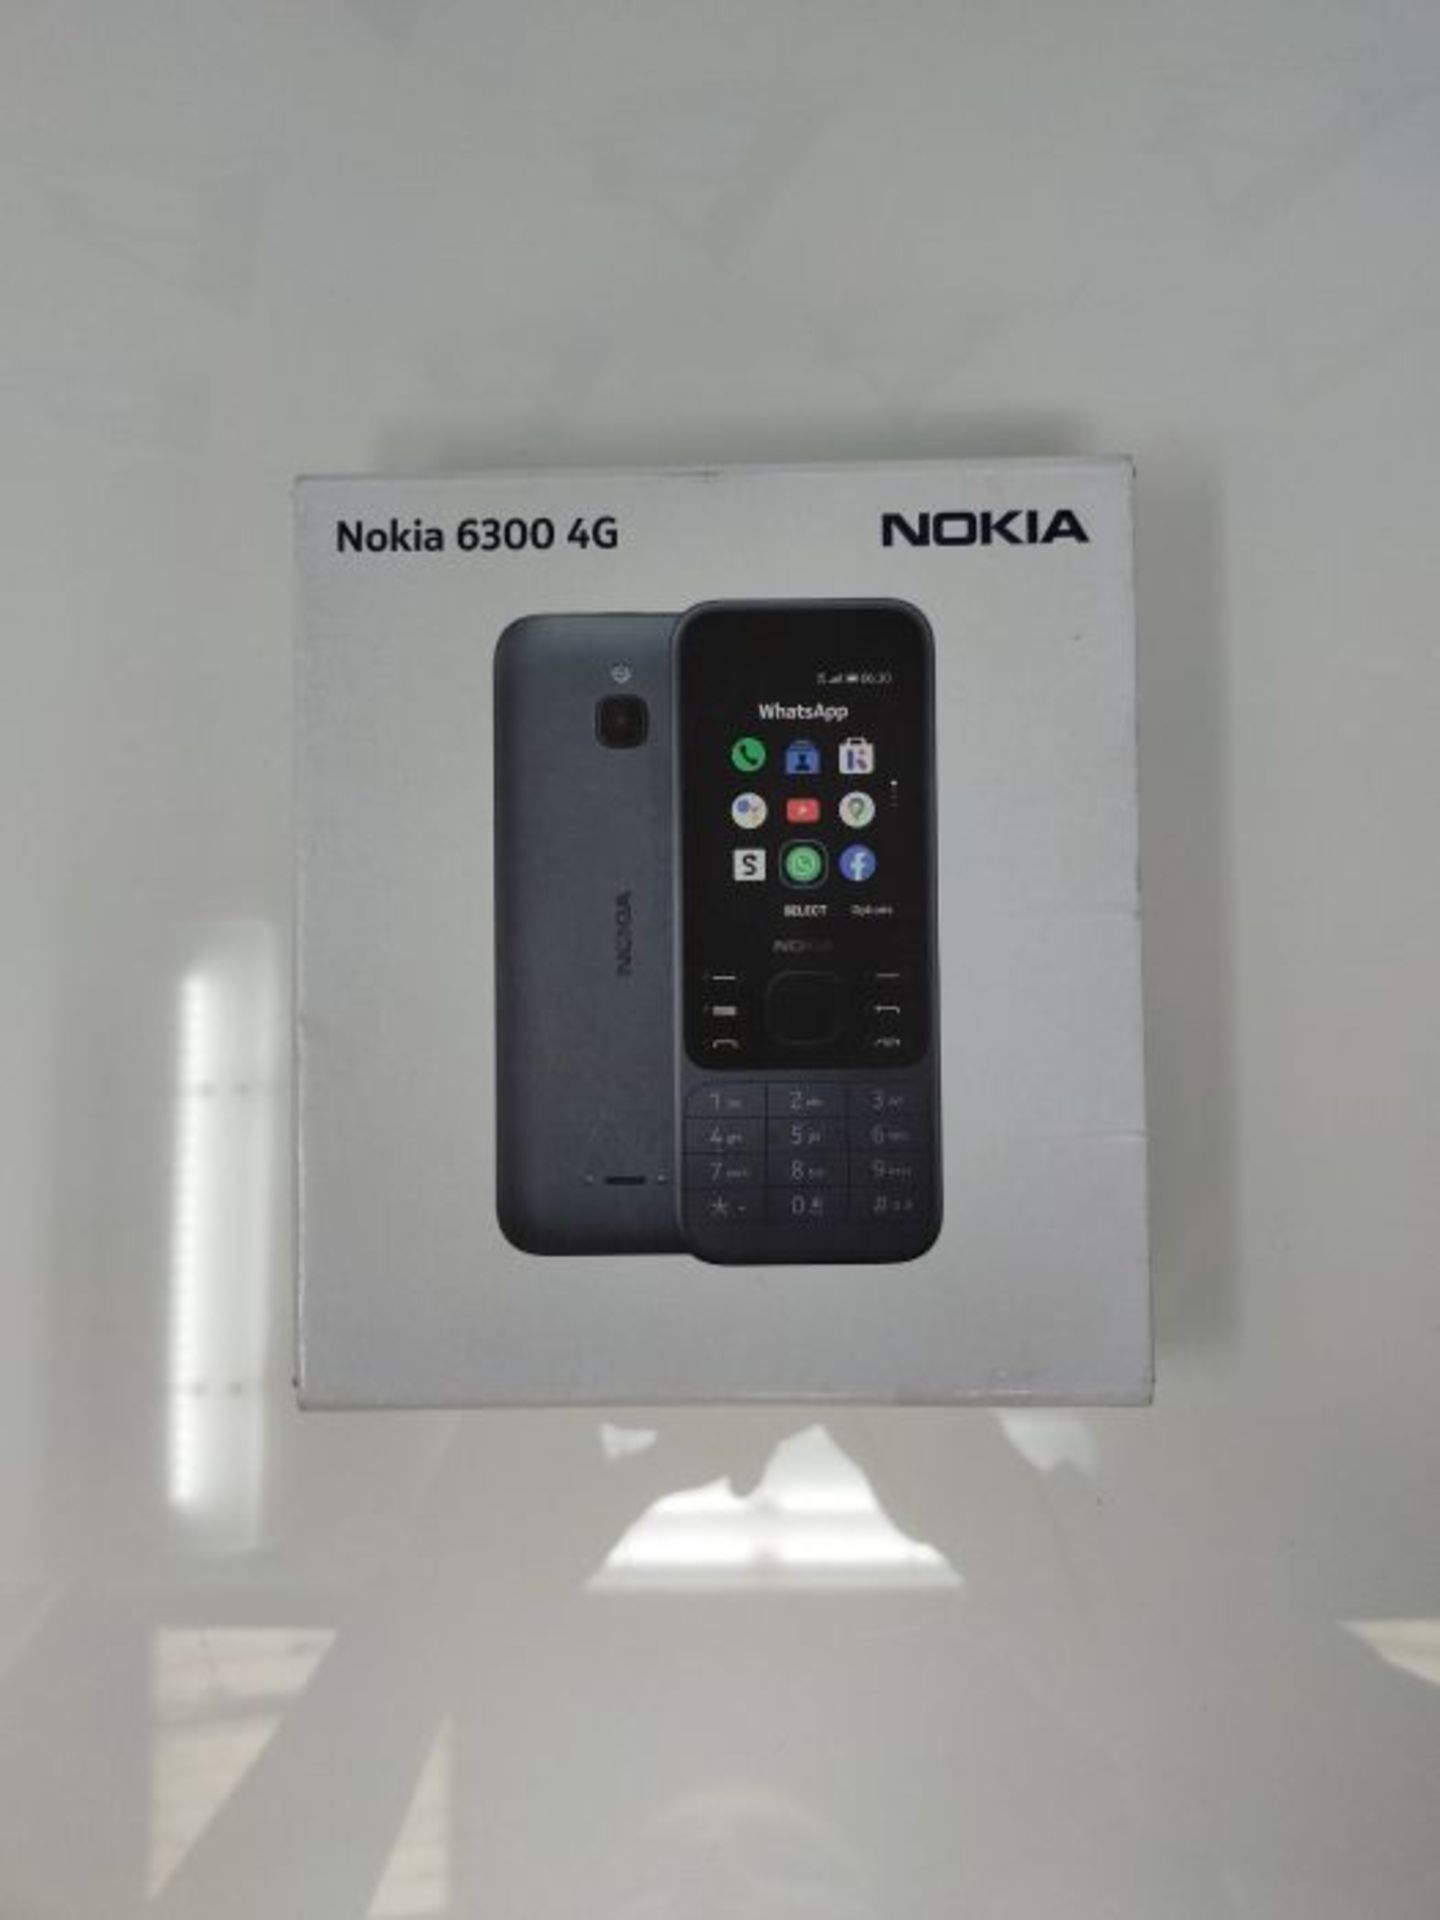 Nokia 216 Dual Sim Phone Case, 16 MB Internal Memory, Black - Guarantee Italy - Image 2 of 3